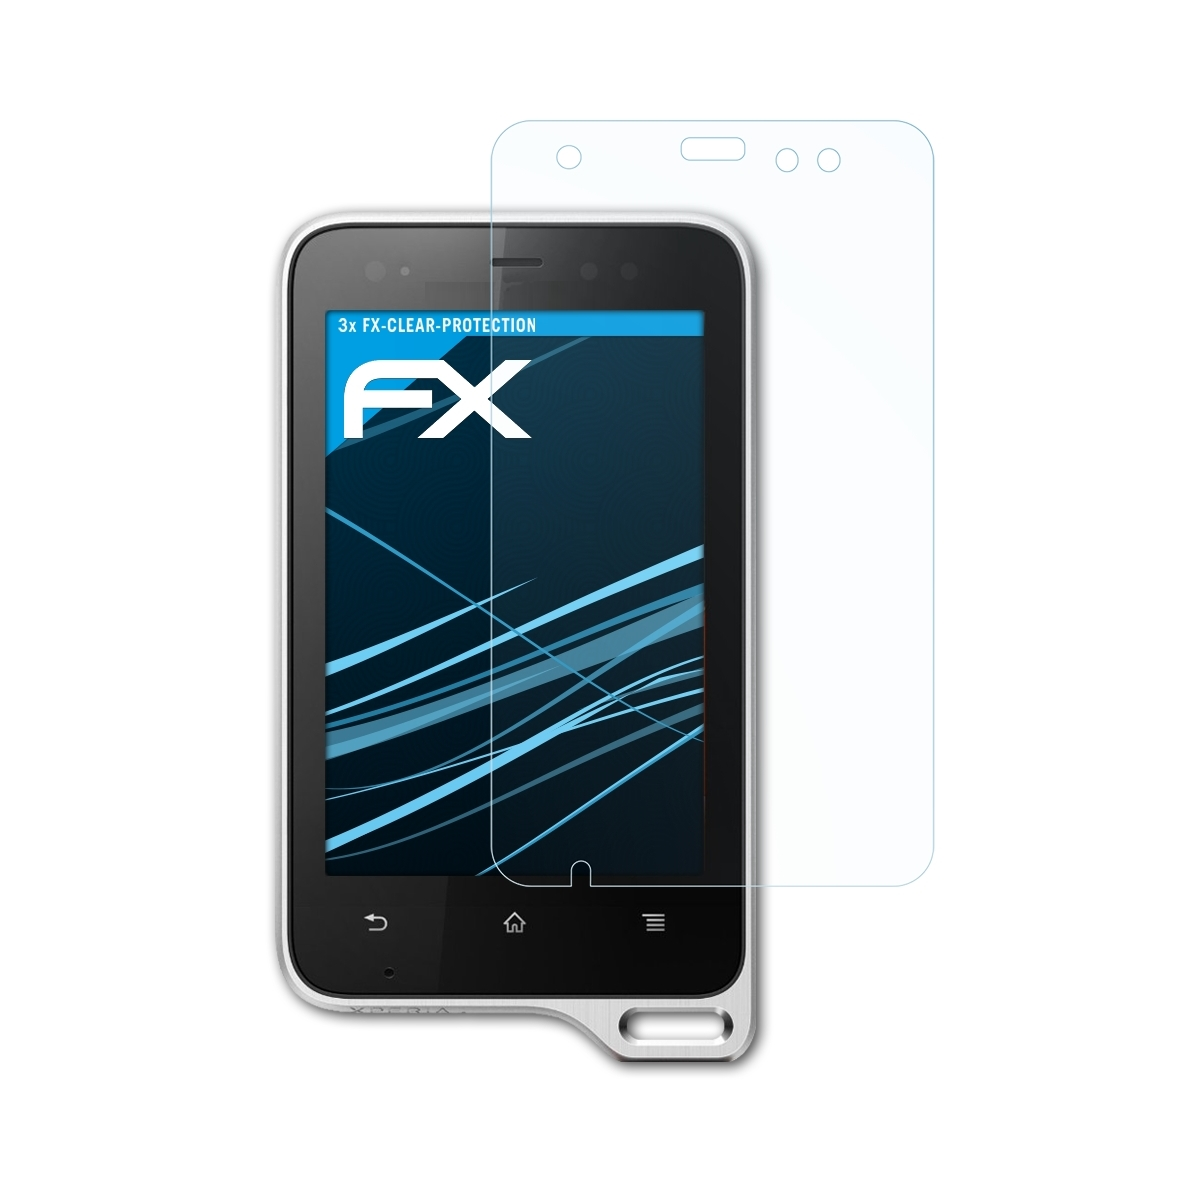 Displayschutz(für Xperia Active) FX-Clear Sony-Ericsson ATFOLIX 3x